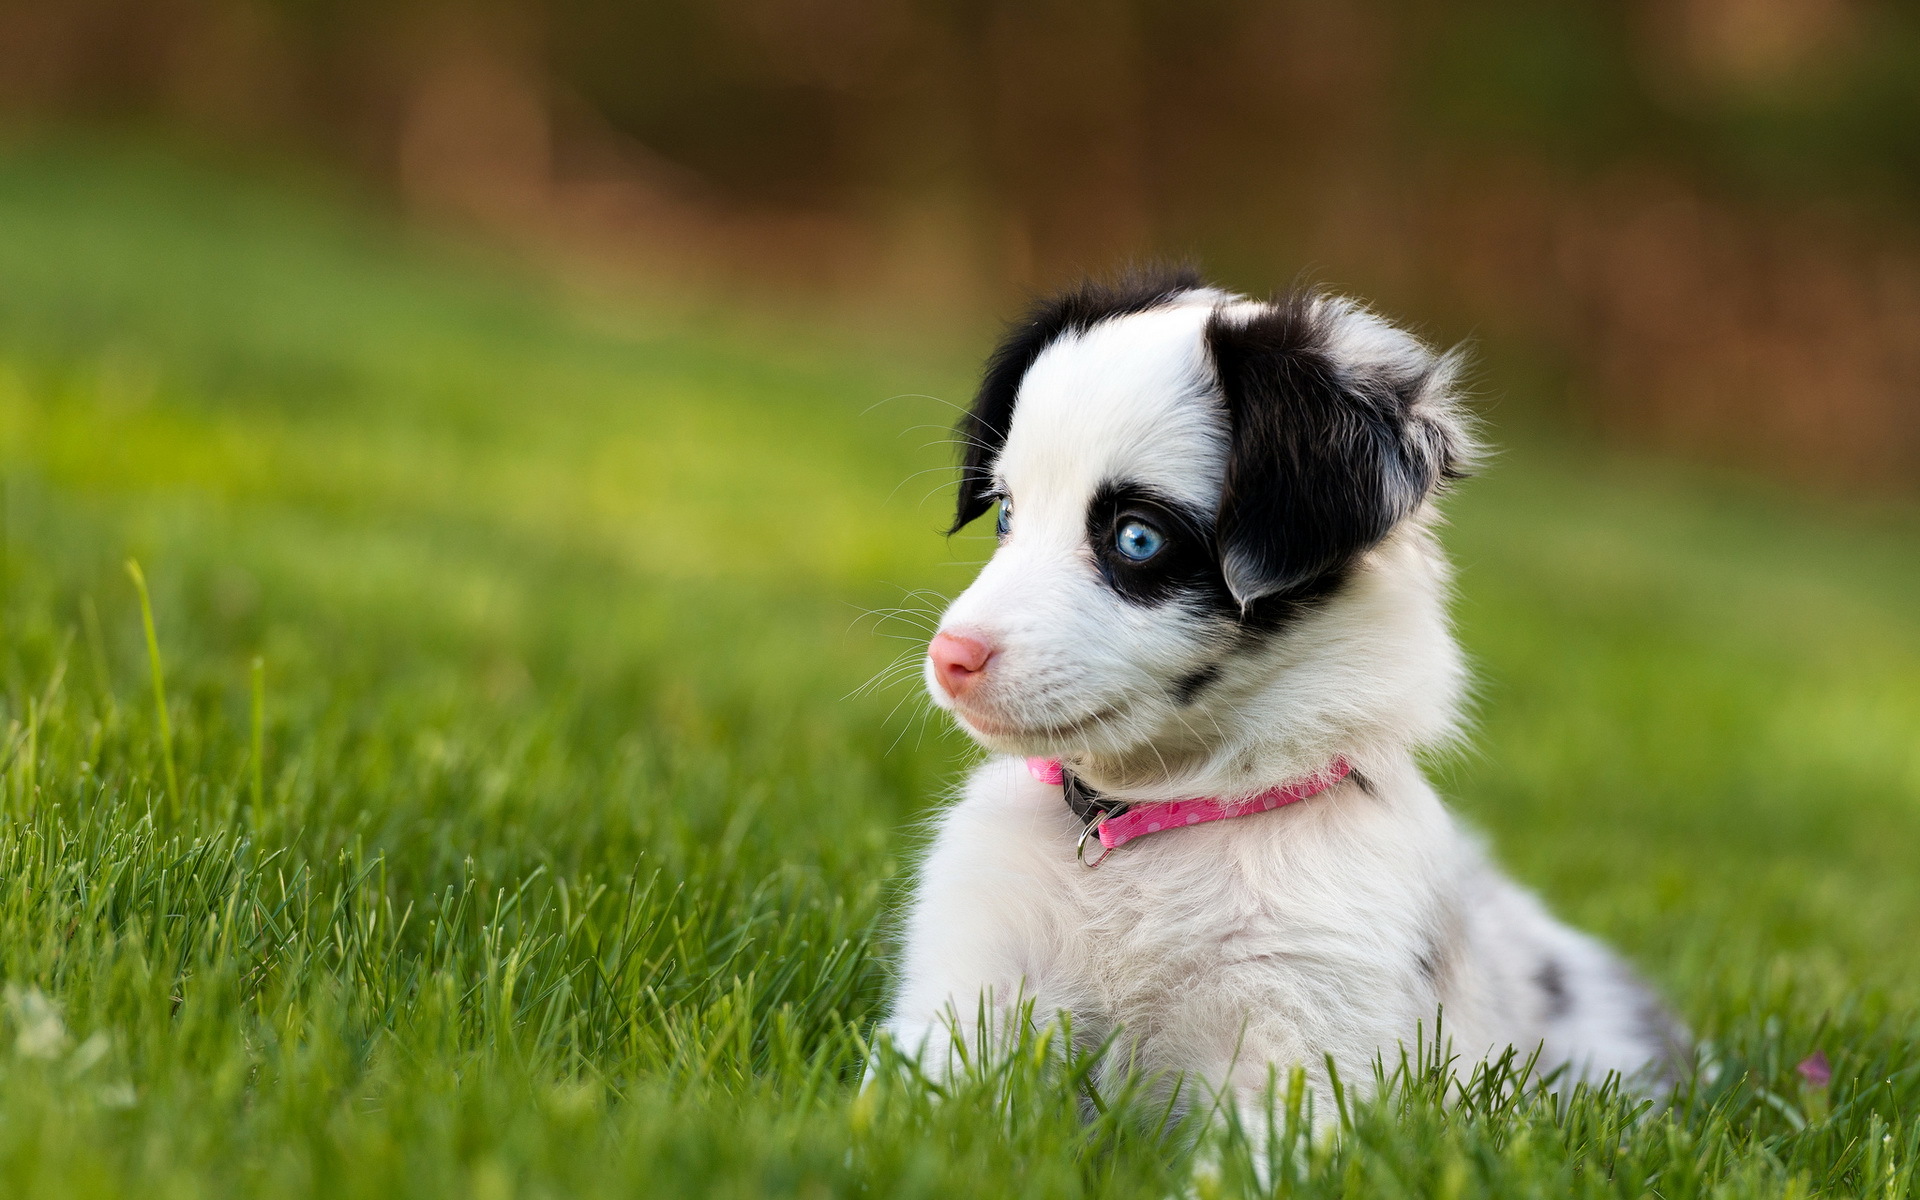  Cute Dogs Wallpapers Dog Puppy Desktop Wallpapers